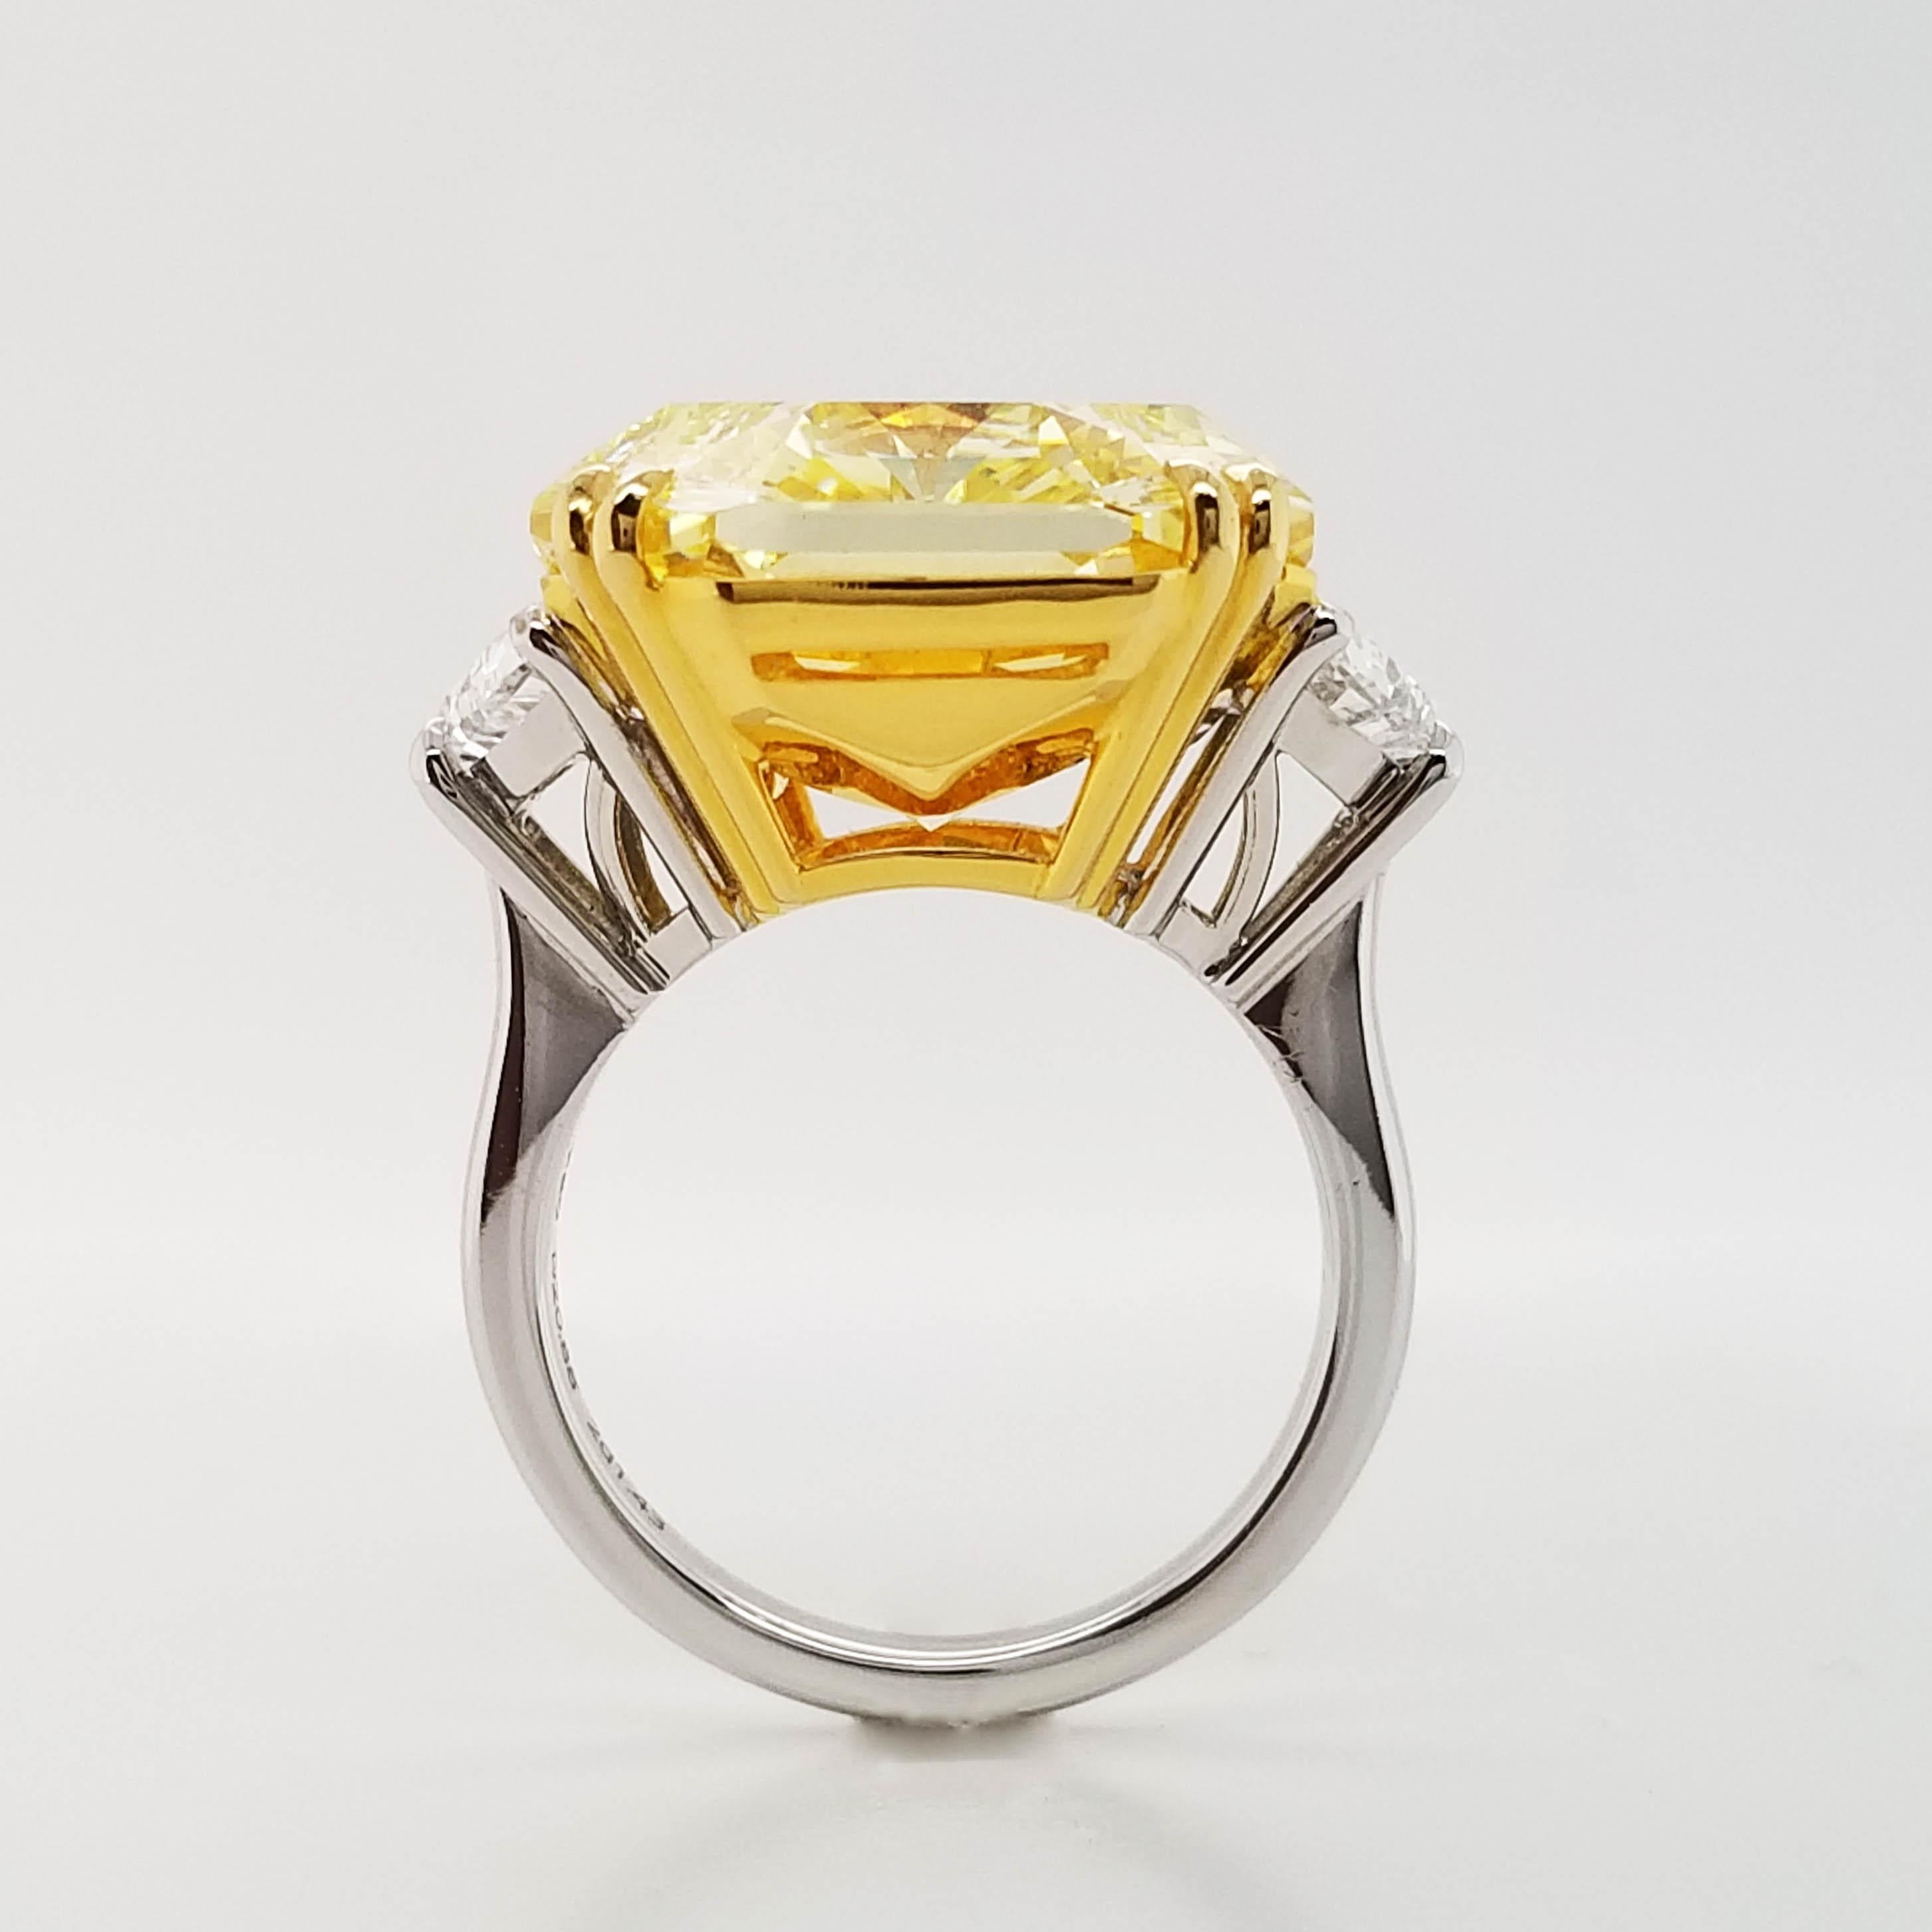 20 carat yellow diamond